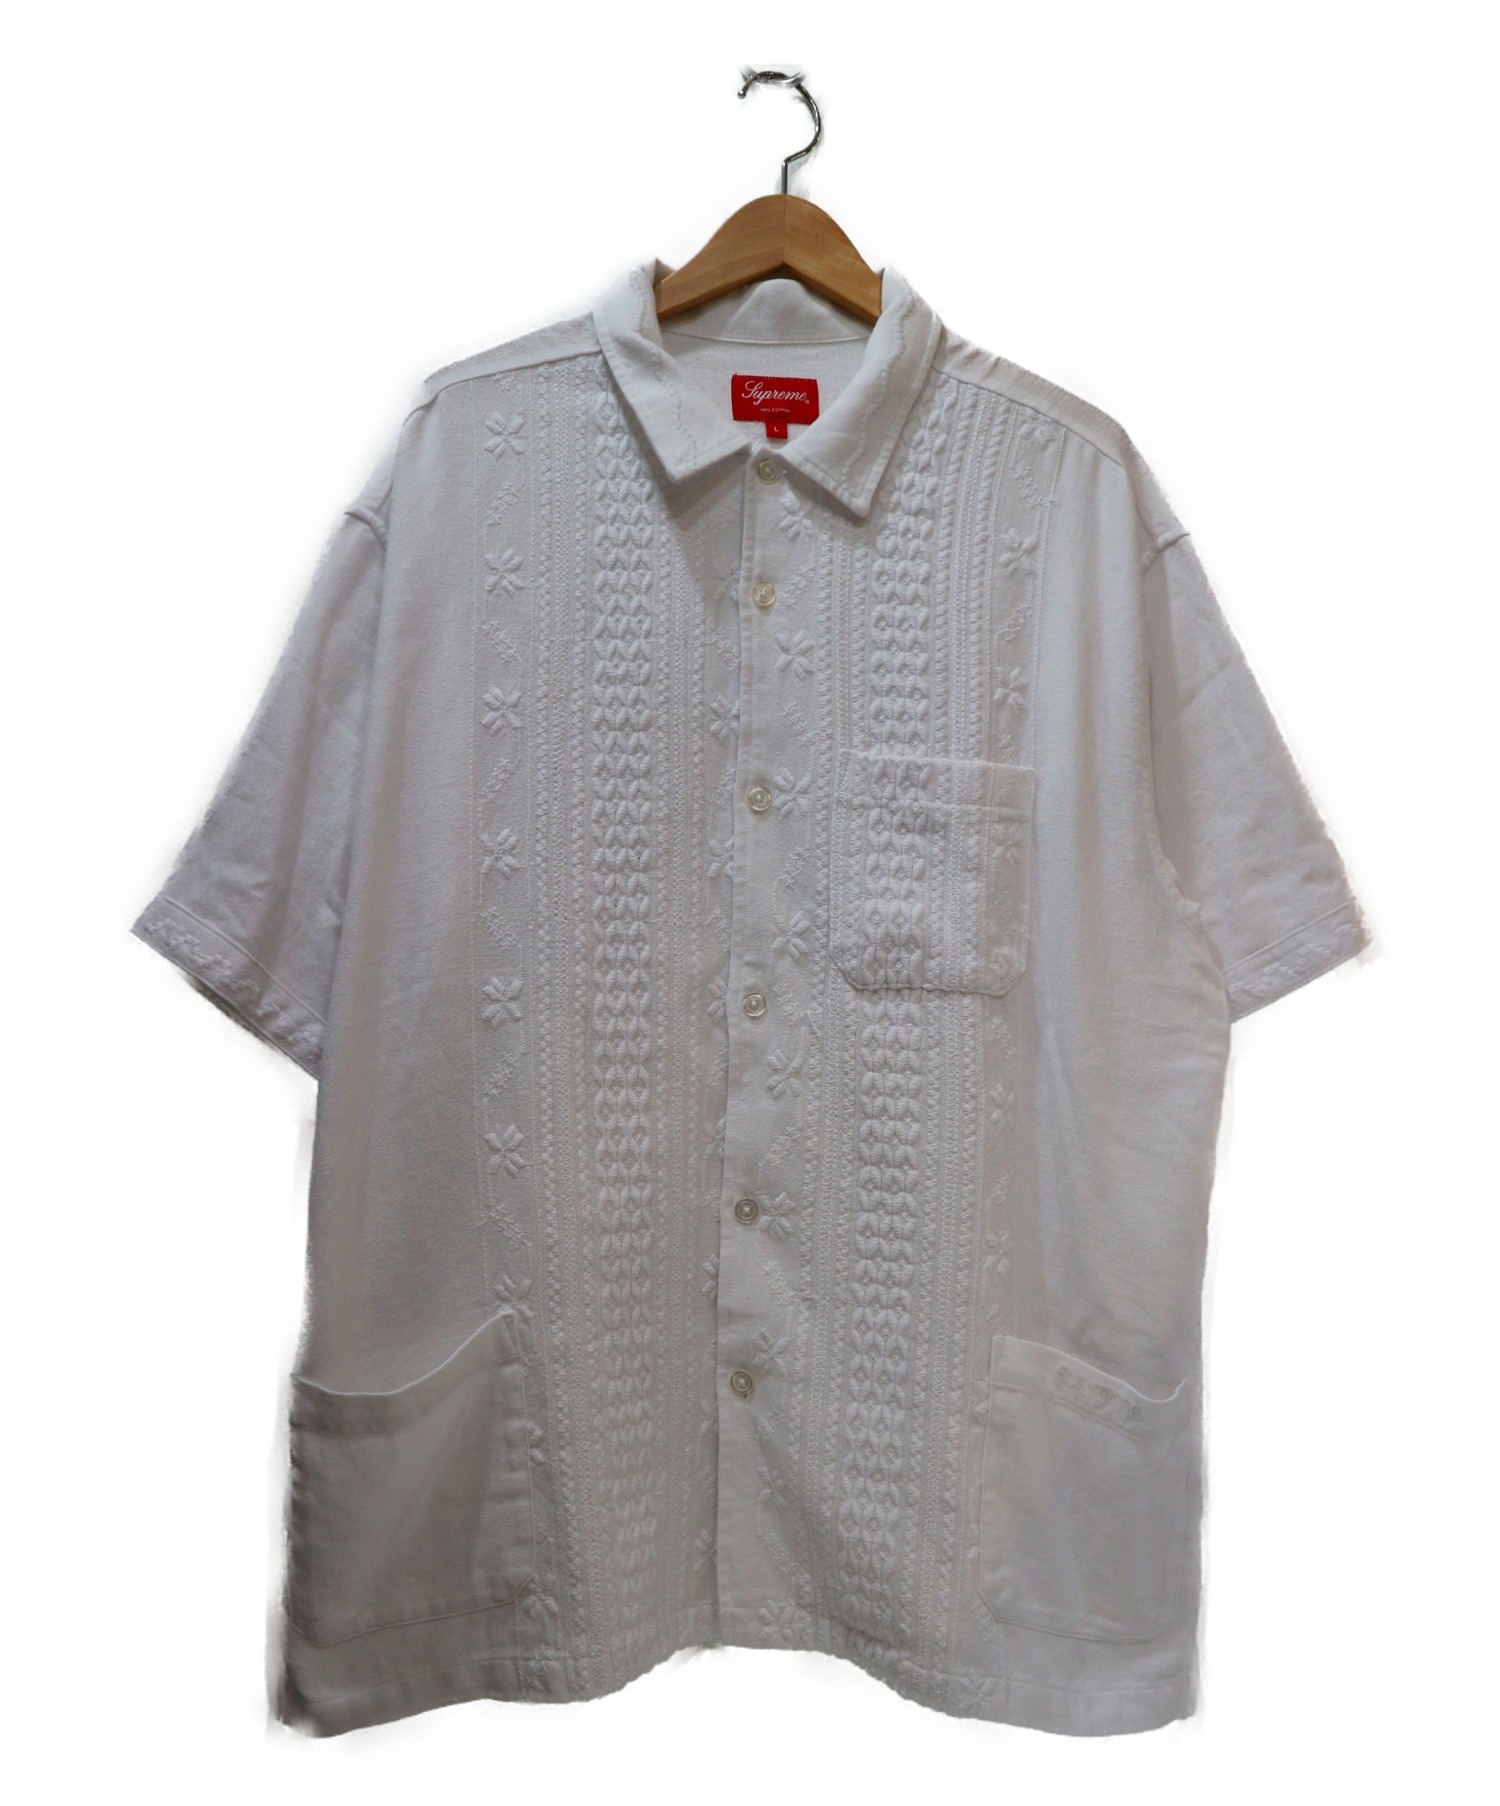 Supreme (シュプリーム) 半袖エンブロイダリー刺繍シャツ ホワイト サイズ:L 20SS WEEK18 EMBROIDERED S/S  SHIRT